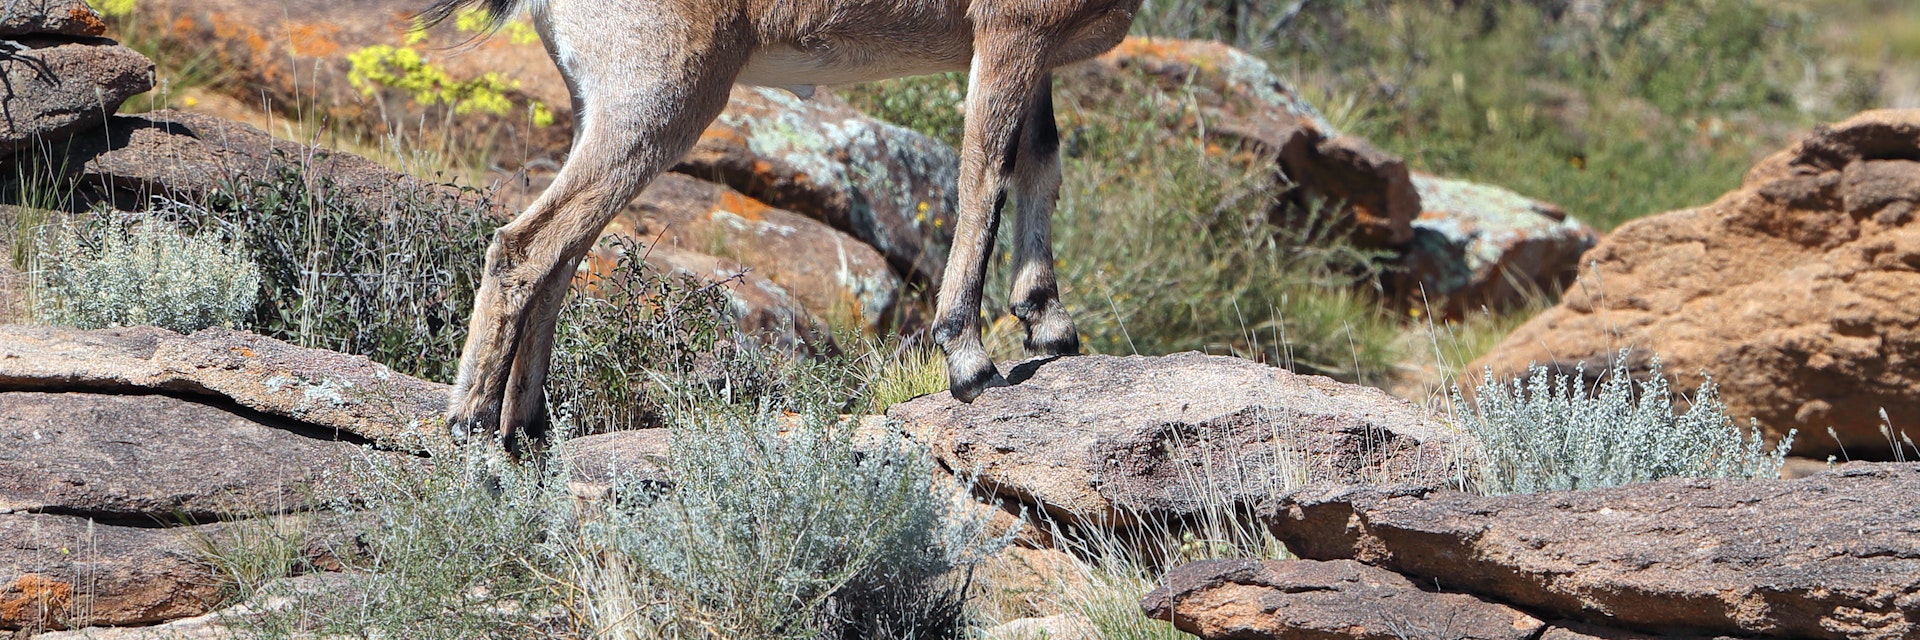 Siberian Ibex (Capra sibirica) at Ikh Nart Nature Reserve in Mongolia.; Shutterstock ID 1659526936; your: Barbara Di Castro; gl: 65050; netsuite: digital; full: poi
1659526936